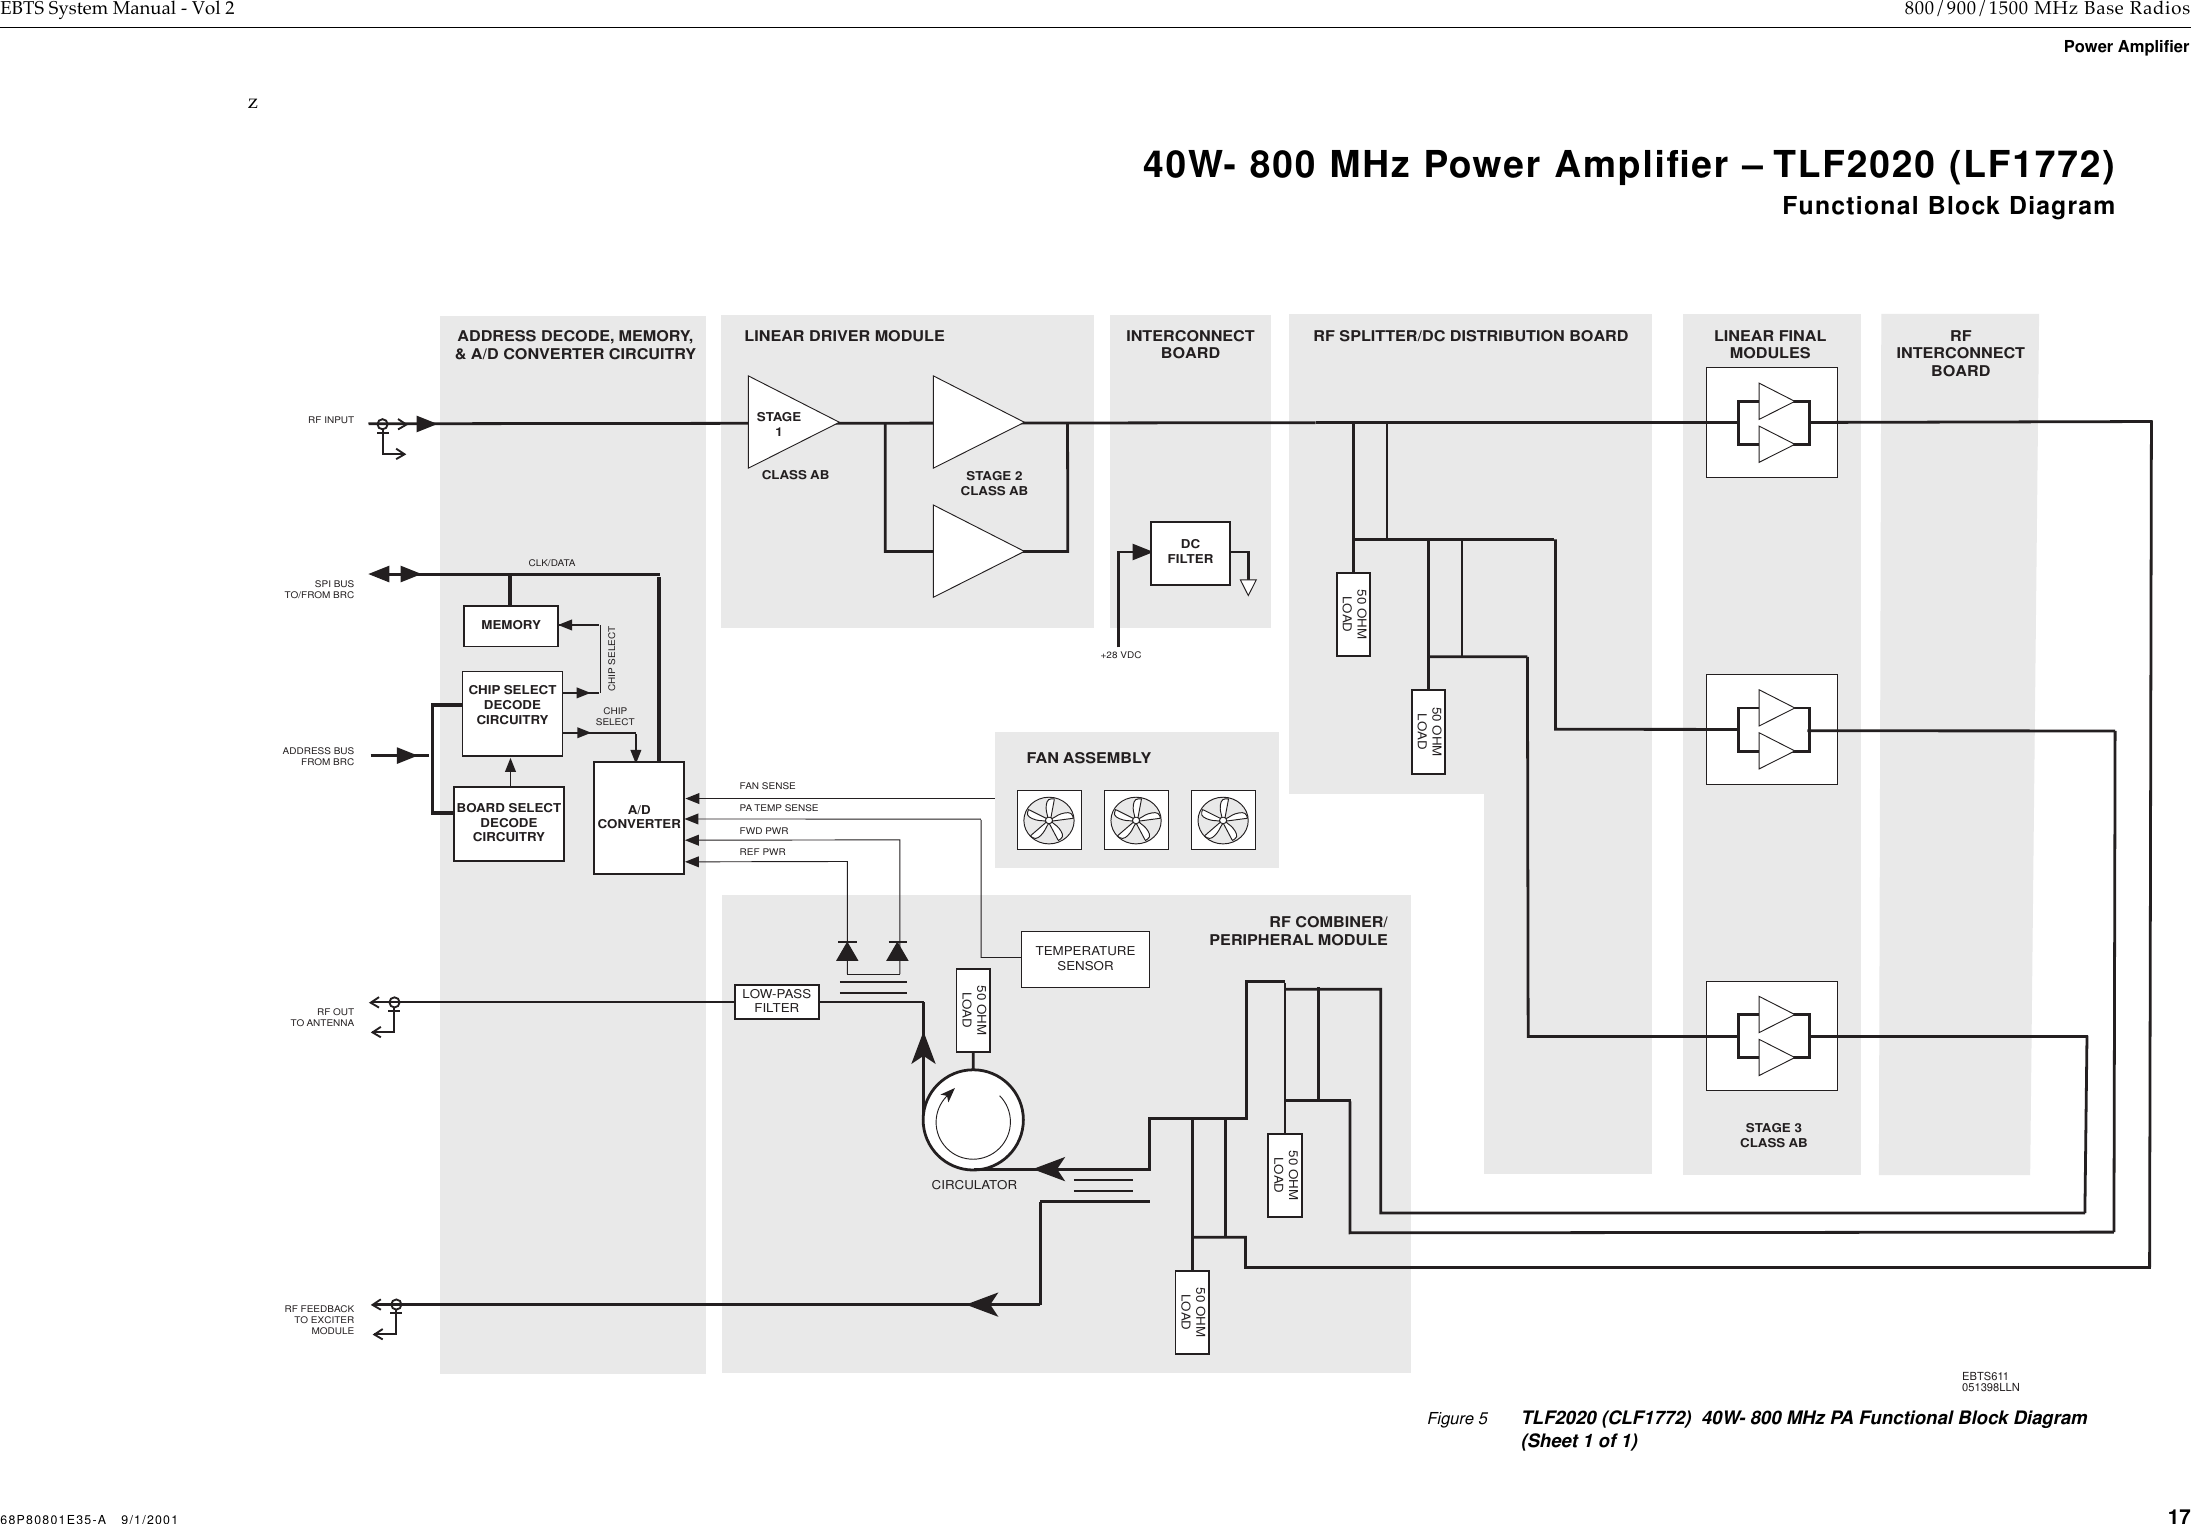 68P80801E35-A   9/1/2001 17 EBTS System Manual - Vol 2 800/900/1500 MHz Base RadiosPower Amplifier zDCFILTERADDRESS BUSFROM BRCSPI BUSTO/FROM BRCADDRESS DECODE, MEMORY,&amp; A/D CONVERTER CIRCUITRYMEMORYBOARD SELECTDECODECIRCUITRYCHIPSELECTCHIP SELECTDECODECIRCUITRYCHIP SELECTRF INPUTRF OUTTO ANTENNARF FEEDBACKTO EXCITERMODULEEBTS611051398LLNCLK/DATAA/DCONVERTERLINEAR DRIVER MODULECLASS AB STAGE 2CLASS ABINTERCONNECTBOARD+28 VDCPA TEMP SENSERF COMBINER/PERIPHERAL MODULELOW-PASSFILTERREF PWRFWD PWRFAN SENSETEMPERATURESENSORCIRCULATOR50 OHMLOAD50 OHMLOAD50 OHMLOADFAN ASSEMBLYRFINTERCONNECTBOARDLINEAR FINALMODULESRF SPLITTER/DC DISTRIBUTION BOARDSTAGE 3CLASS AB50 OHMLOAD50 OHMLOADSTAGE1Figure 5 TLF2020 (CLF1772)  40W- 800 MHz PA Functional Block Diagram (Sheet 1 of 1)40W- 800 MHz Power Ampliﬁer – TLF2020 (LF1772)Functional Block Diagram